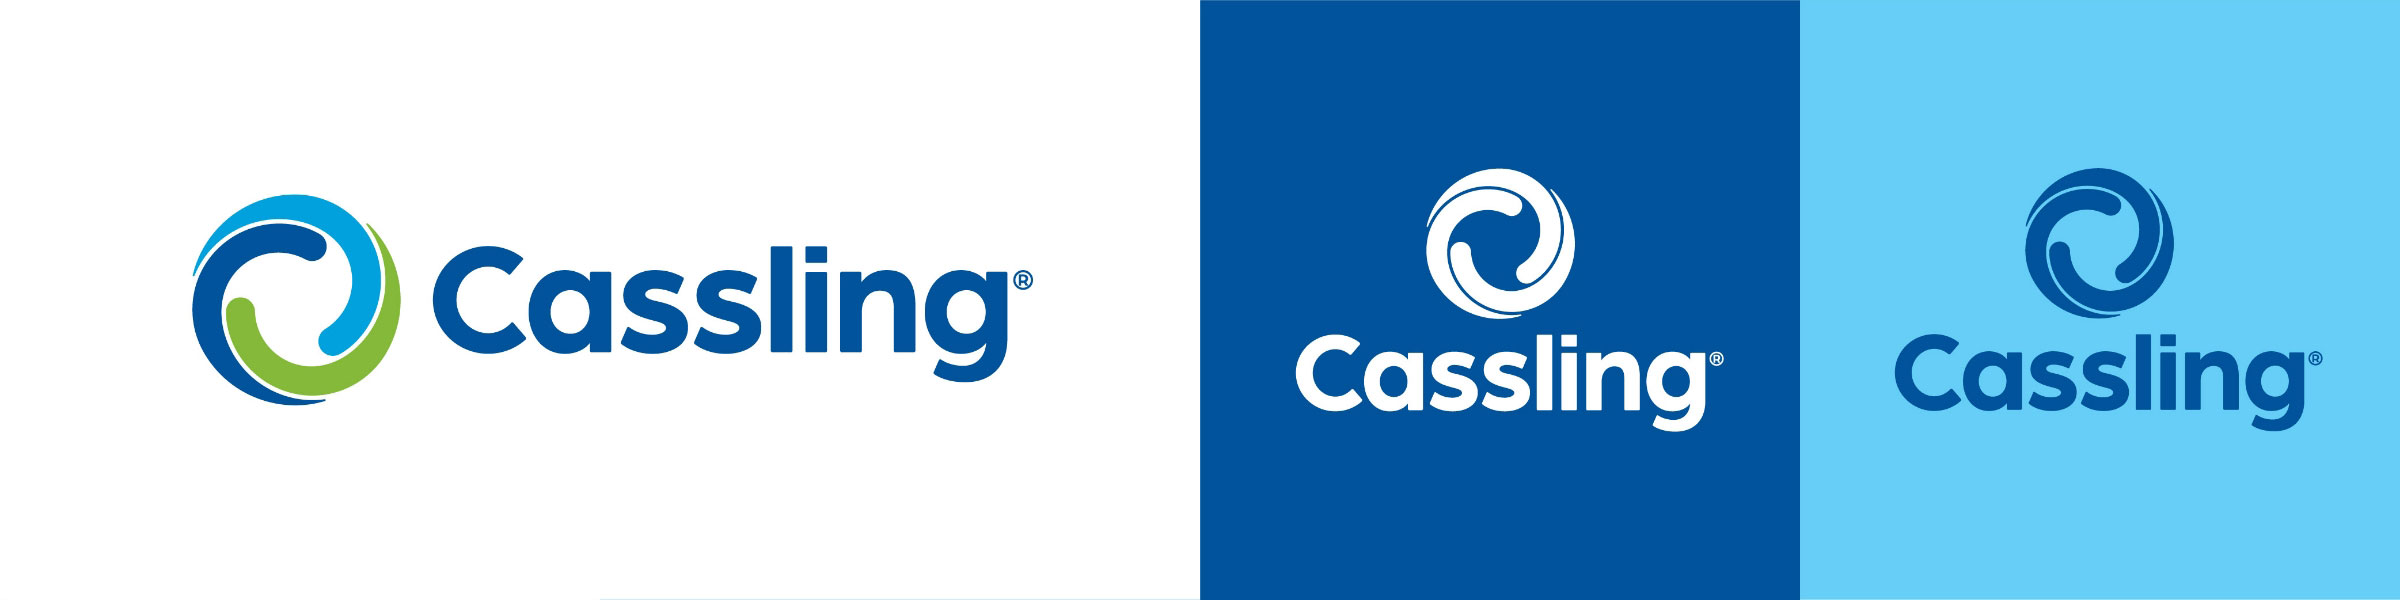 Cassling Logo